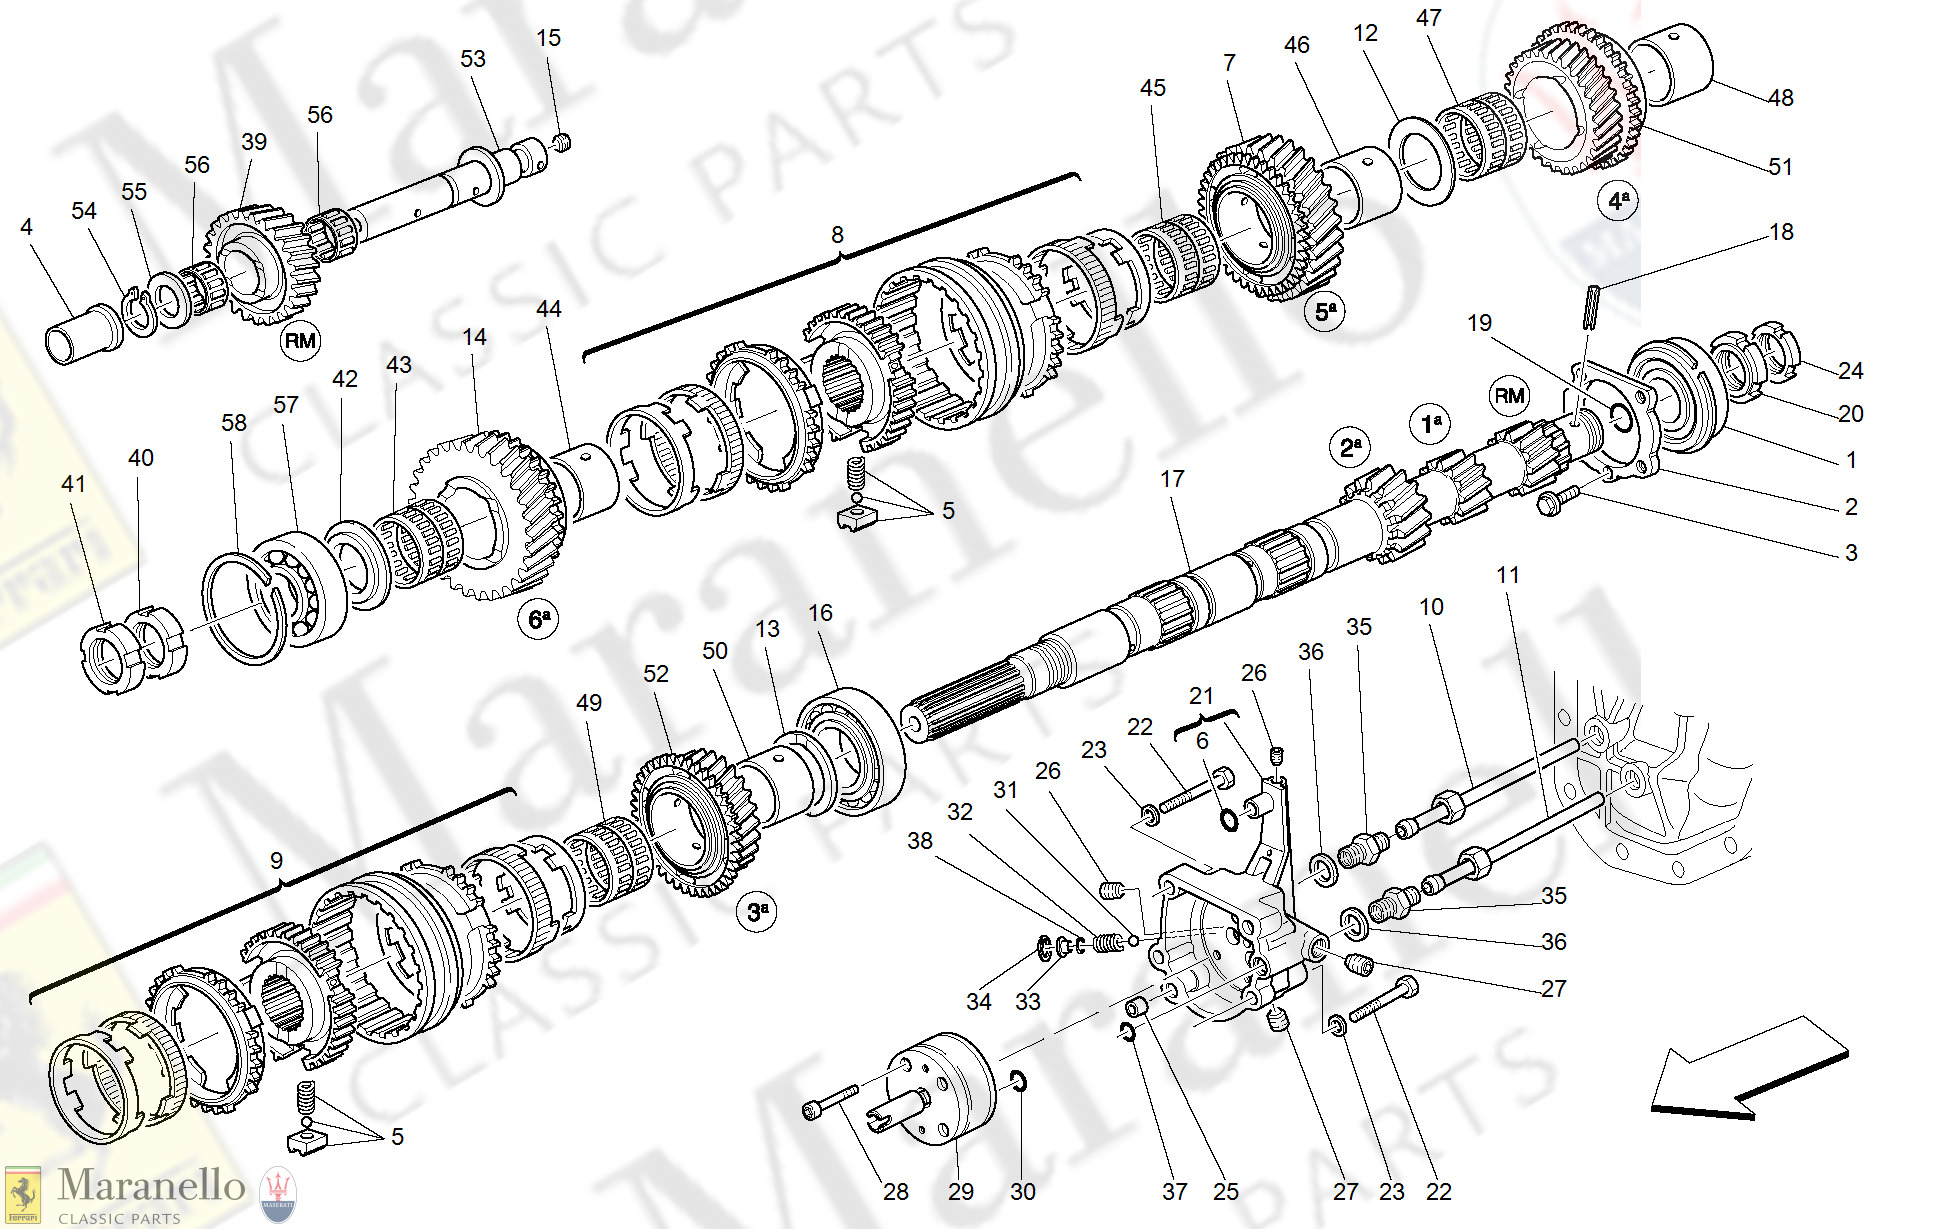 032 - Main Shaft Gears And Clutch Oil Pump